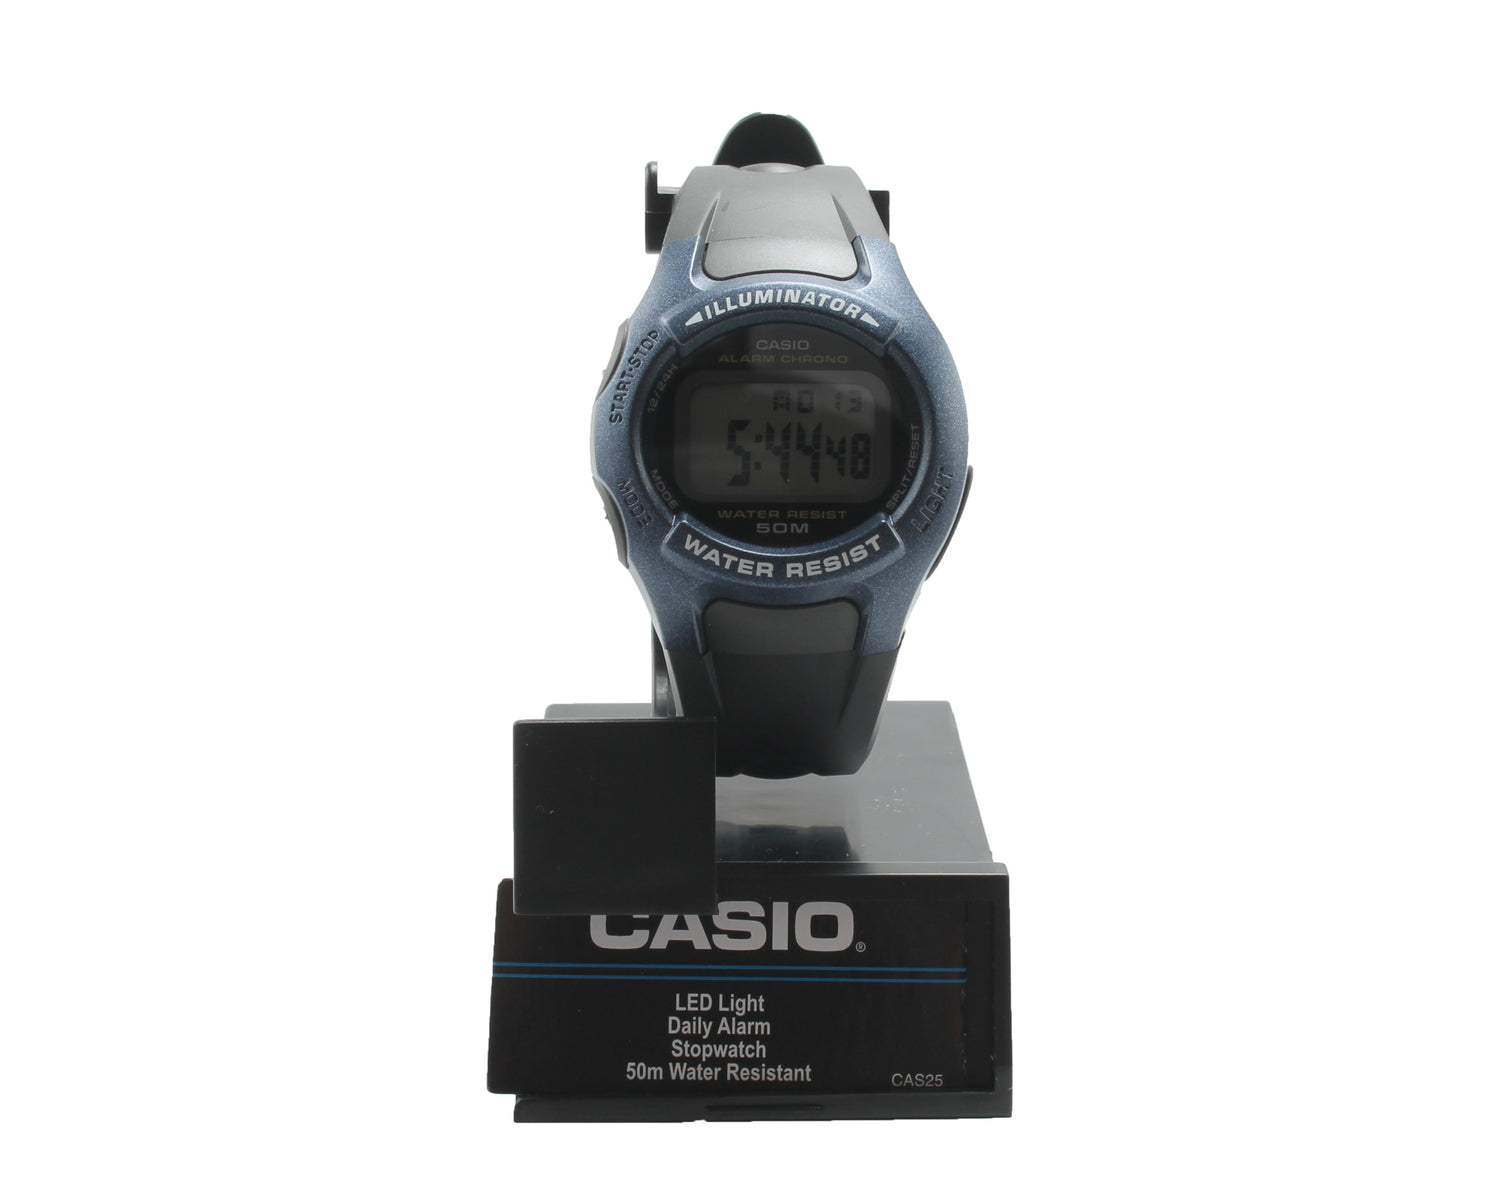 Casio Illuminator Digital Sport Men's Watch